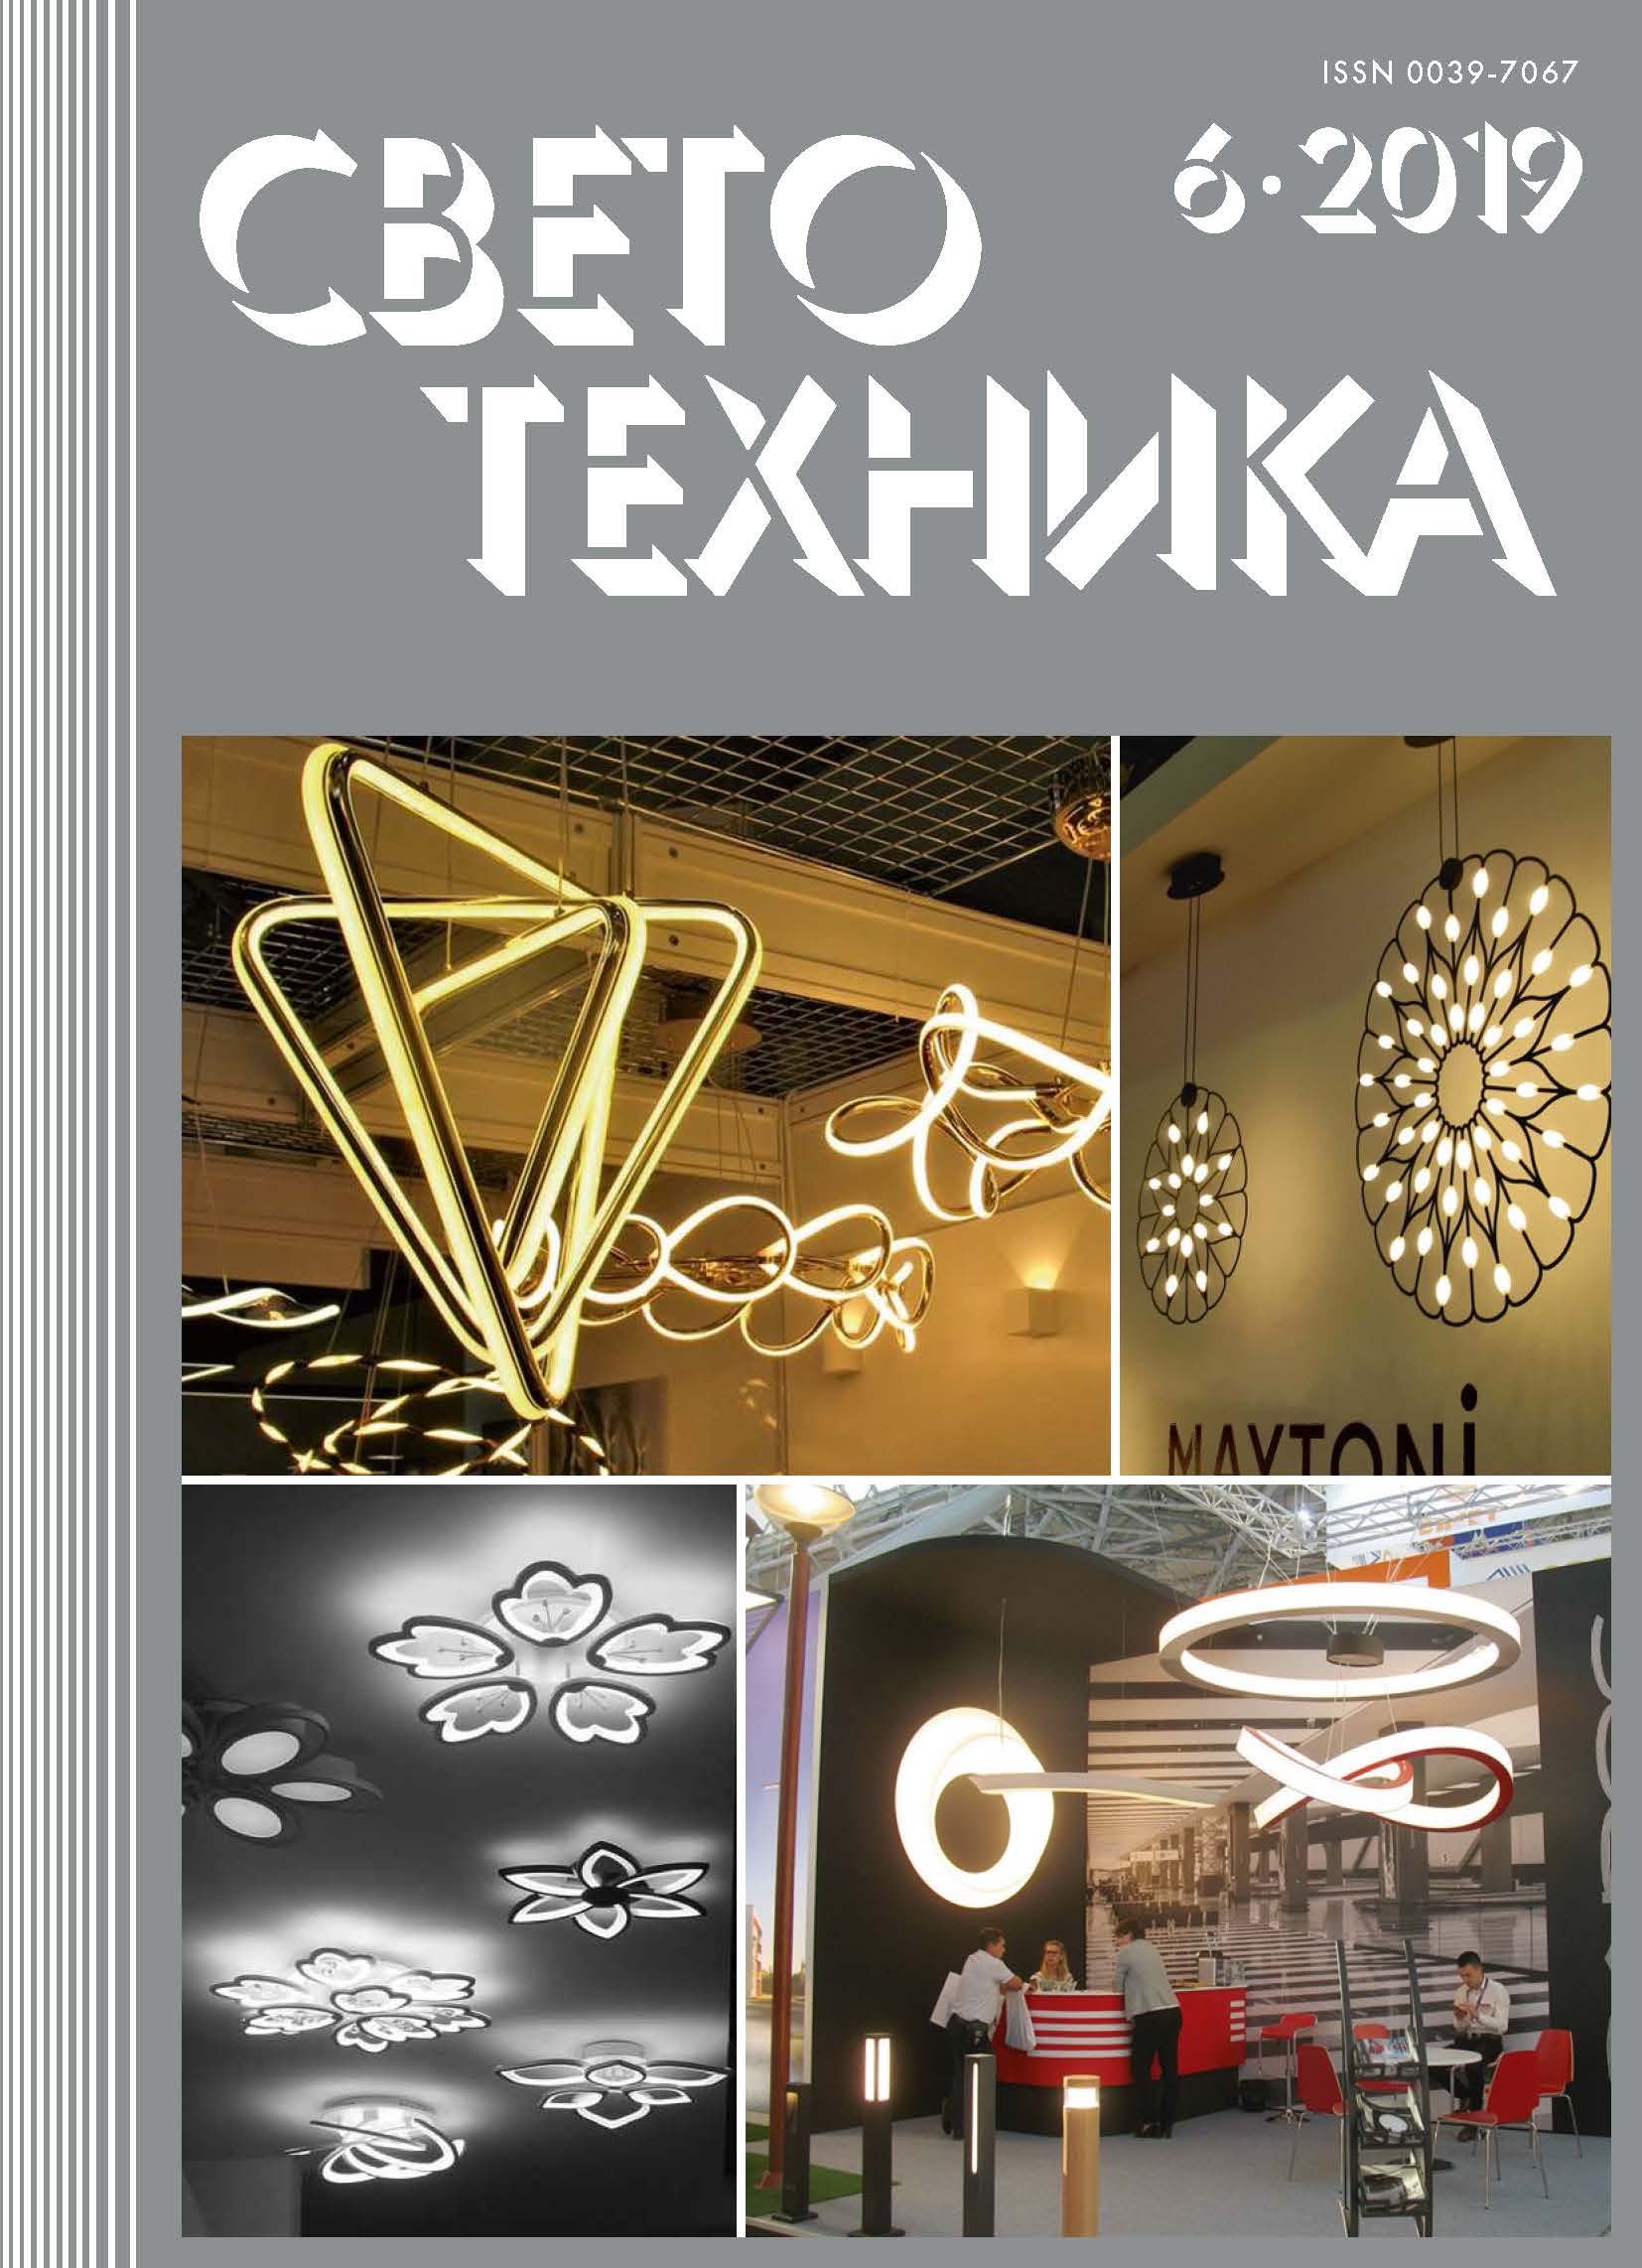 Interlight Russia | Intelligent Building Russia: выставка с историей в новом формате. Журнал «Светотехника» №6 (2019).